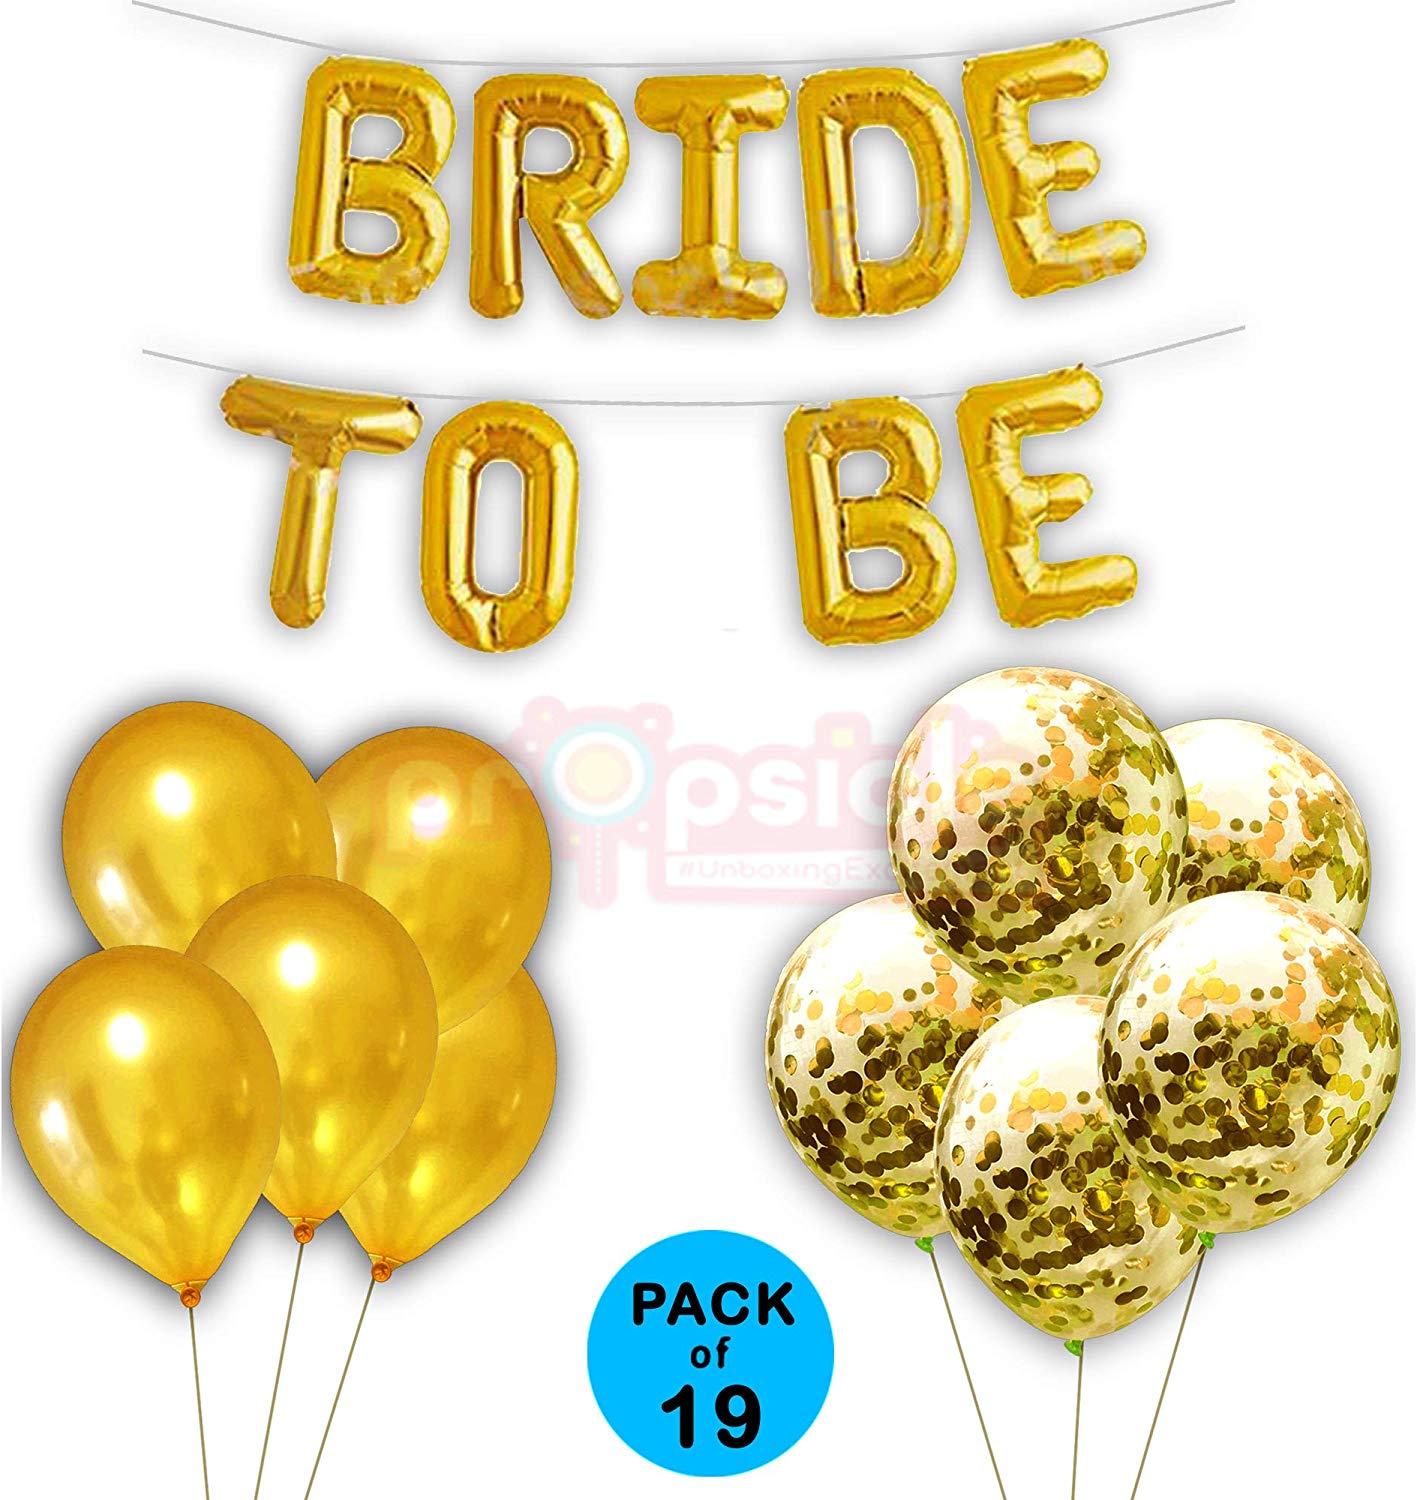 Bride To be Golden Theme Balloon Bouquet